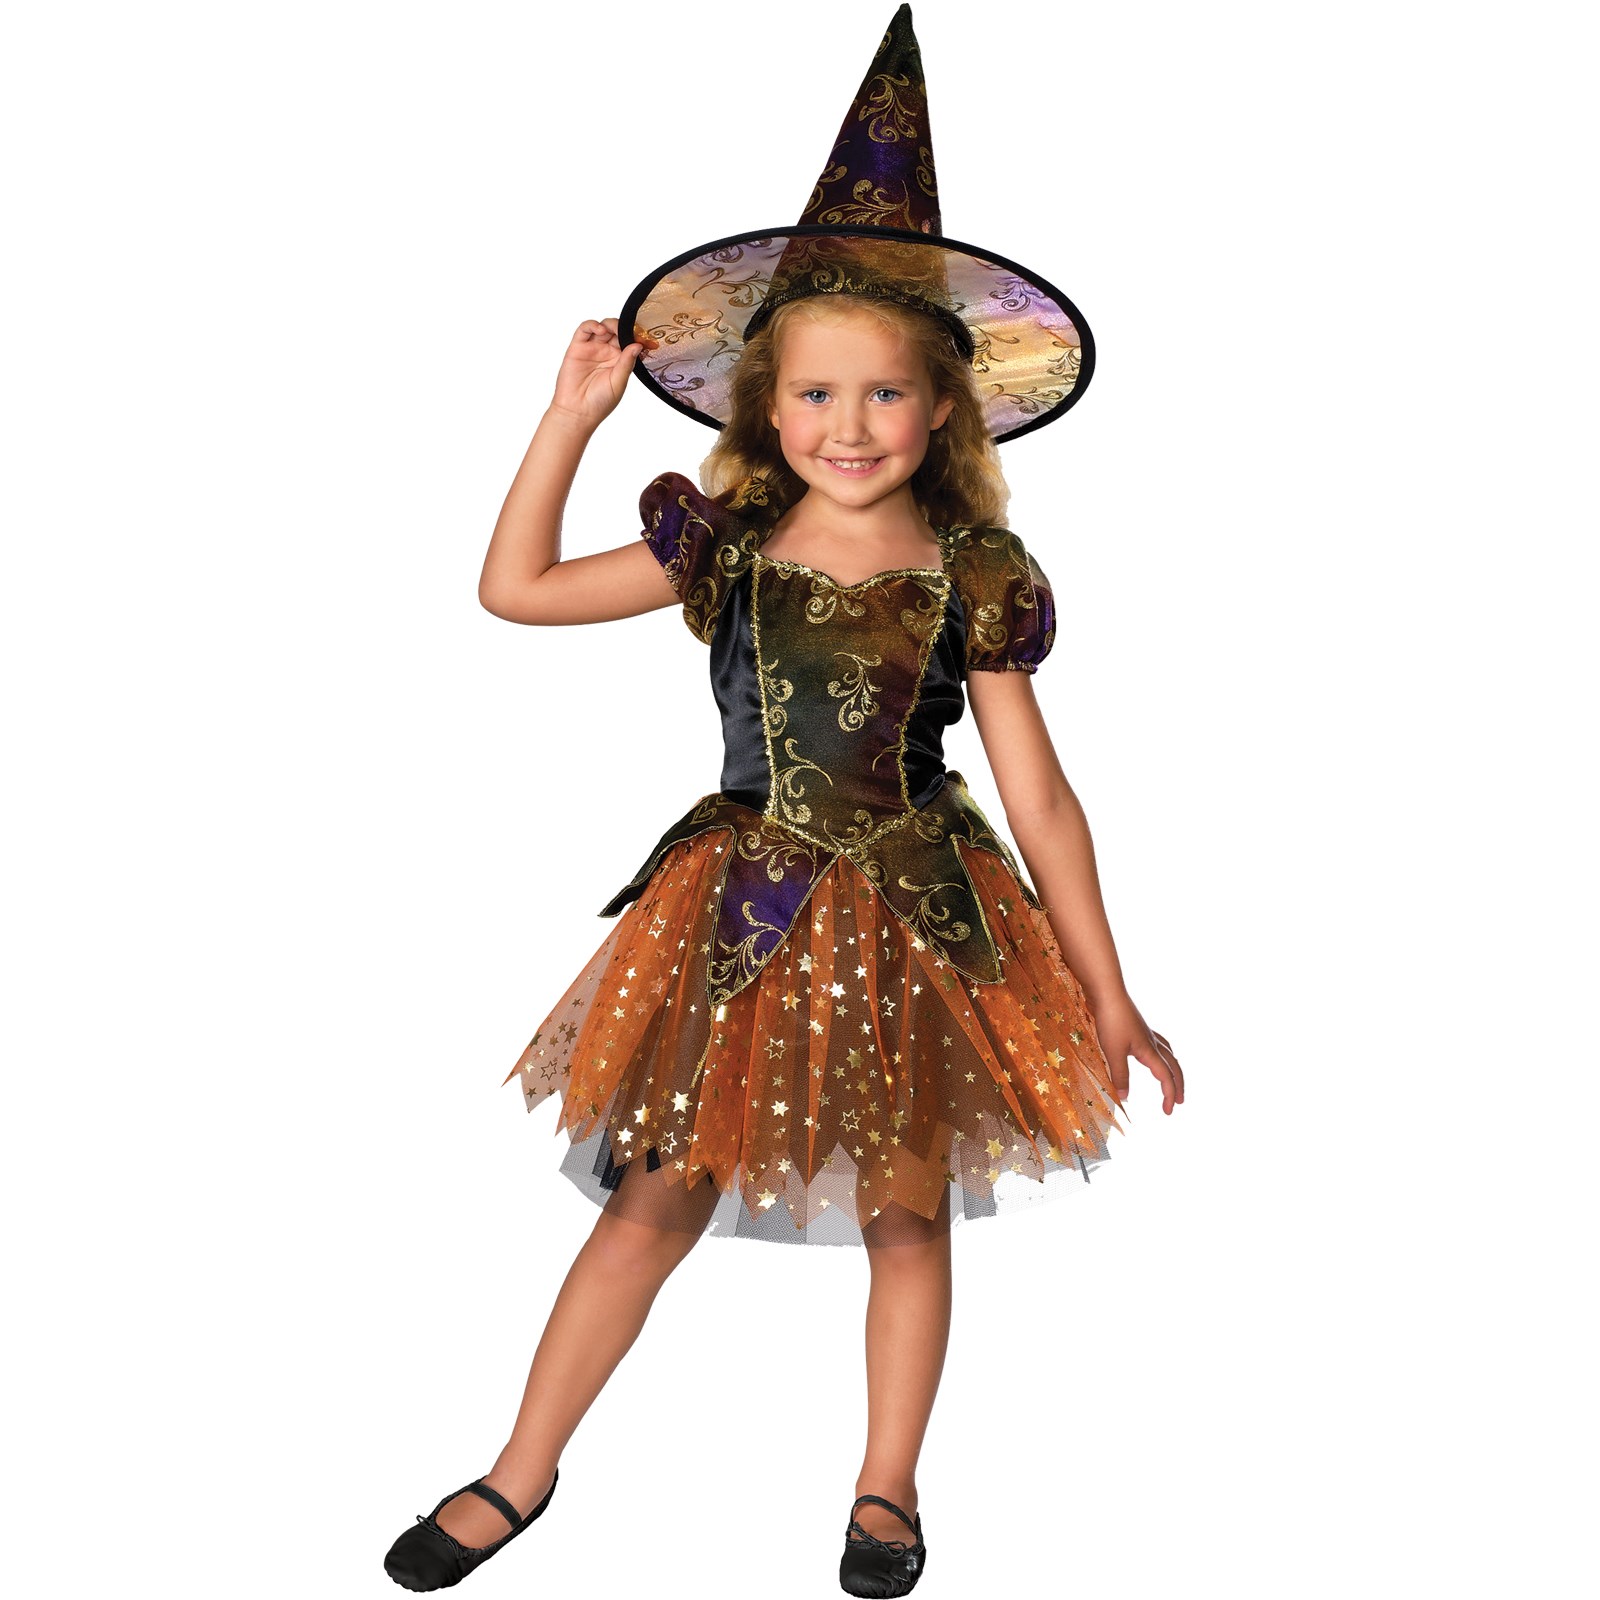 Elegant Witch Toddler / Child Costume